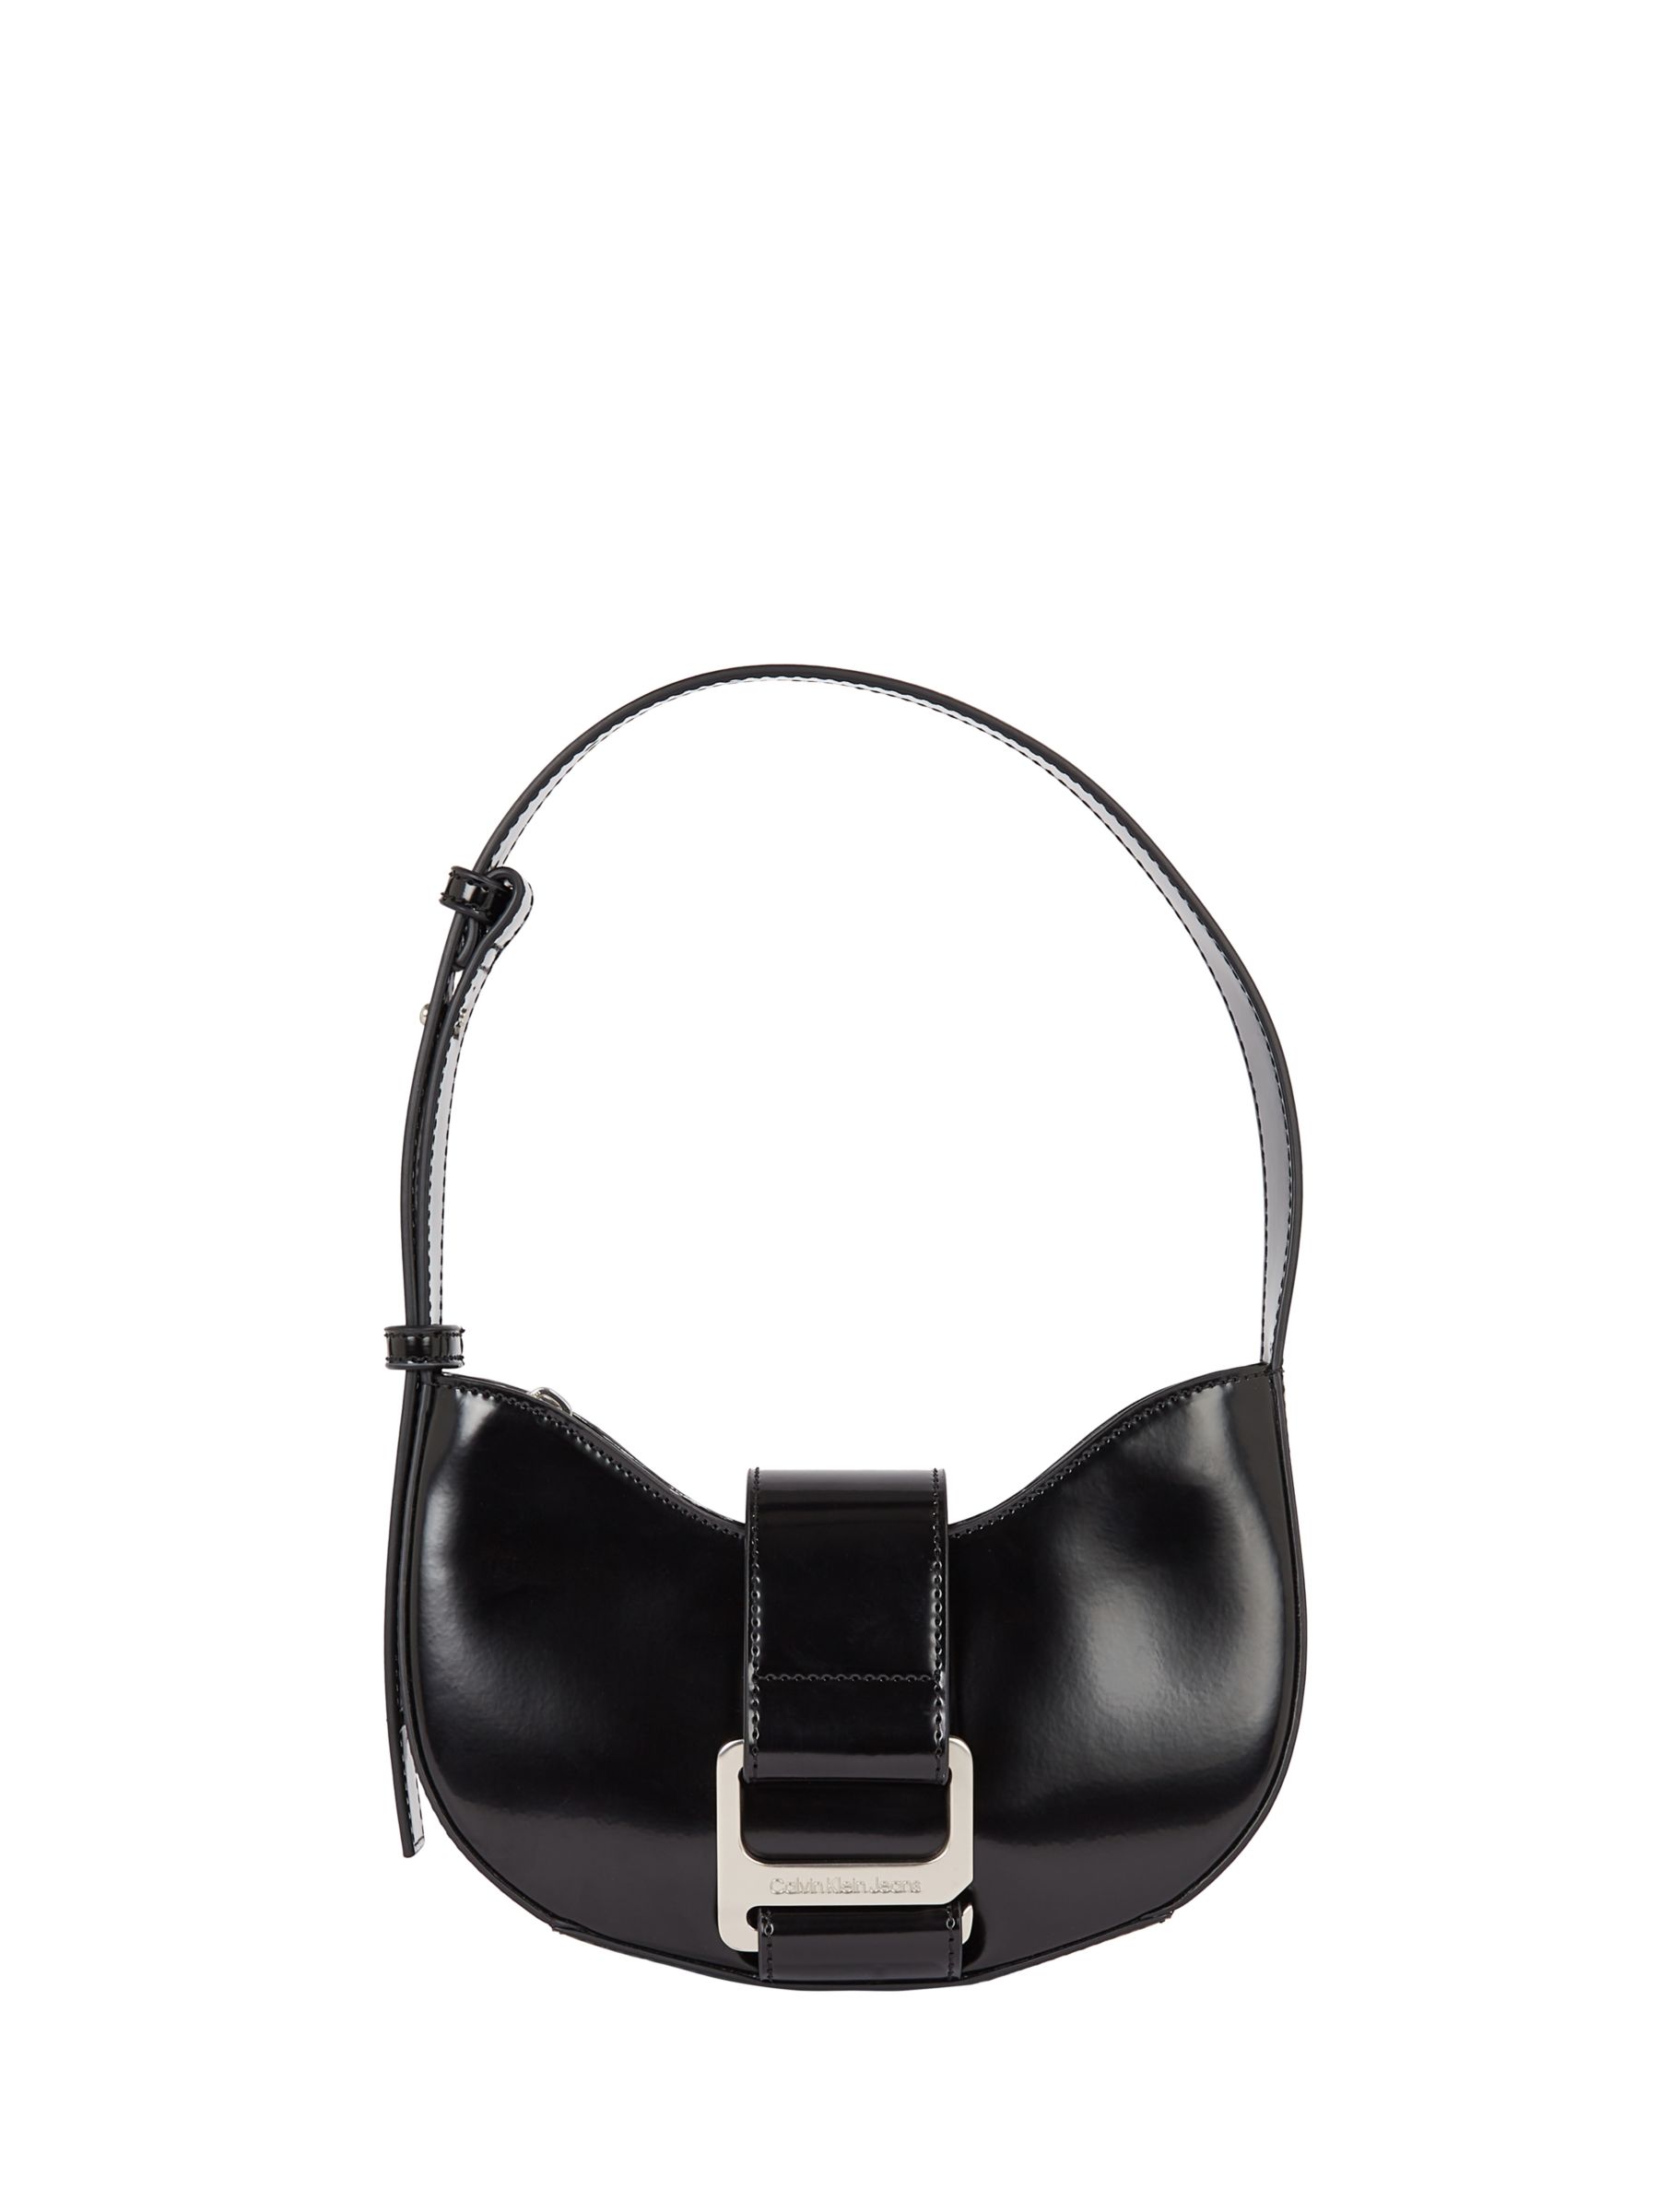 Calvin Klein Round Shoulder Bag, Black at John Lewis & Partners